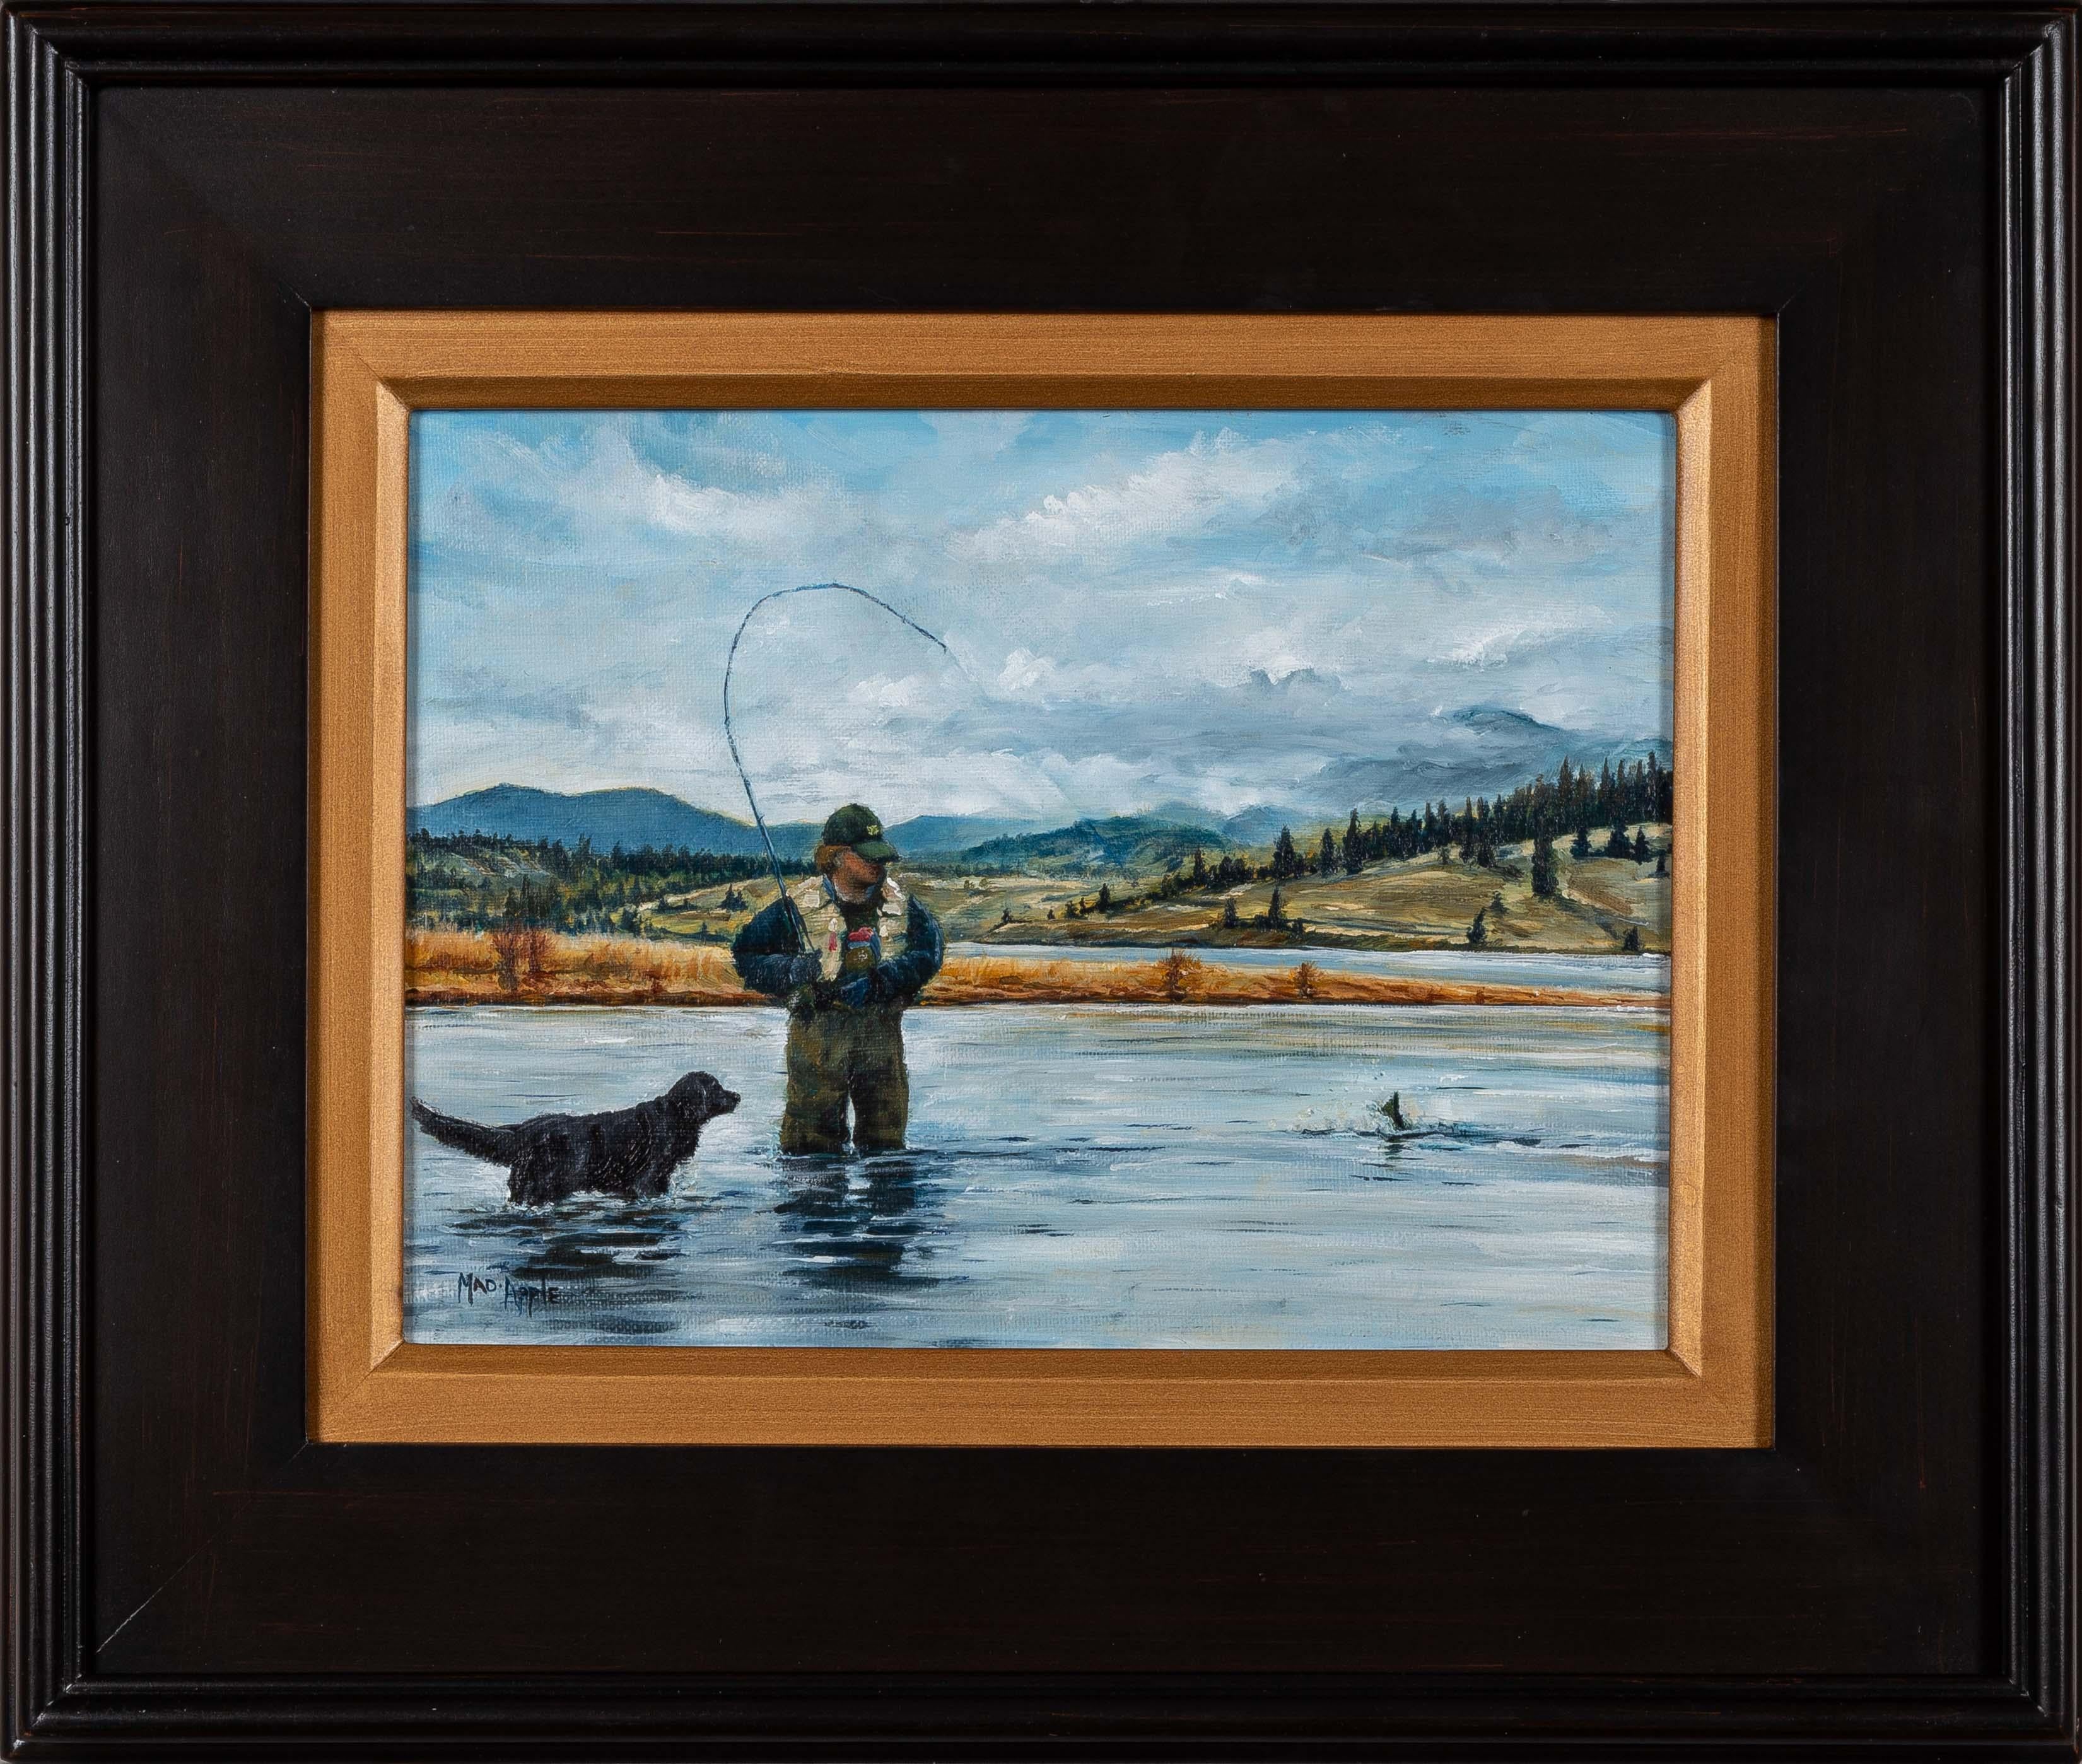 Madison Apple Figurative Painting - Fly Fishing With Dog Missouri River Montana Western Landscape Original Oil